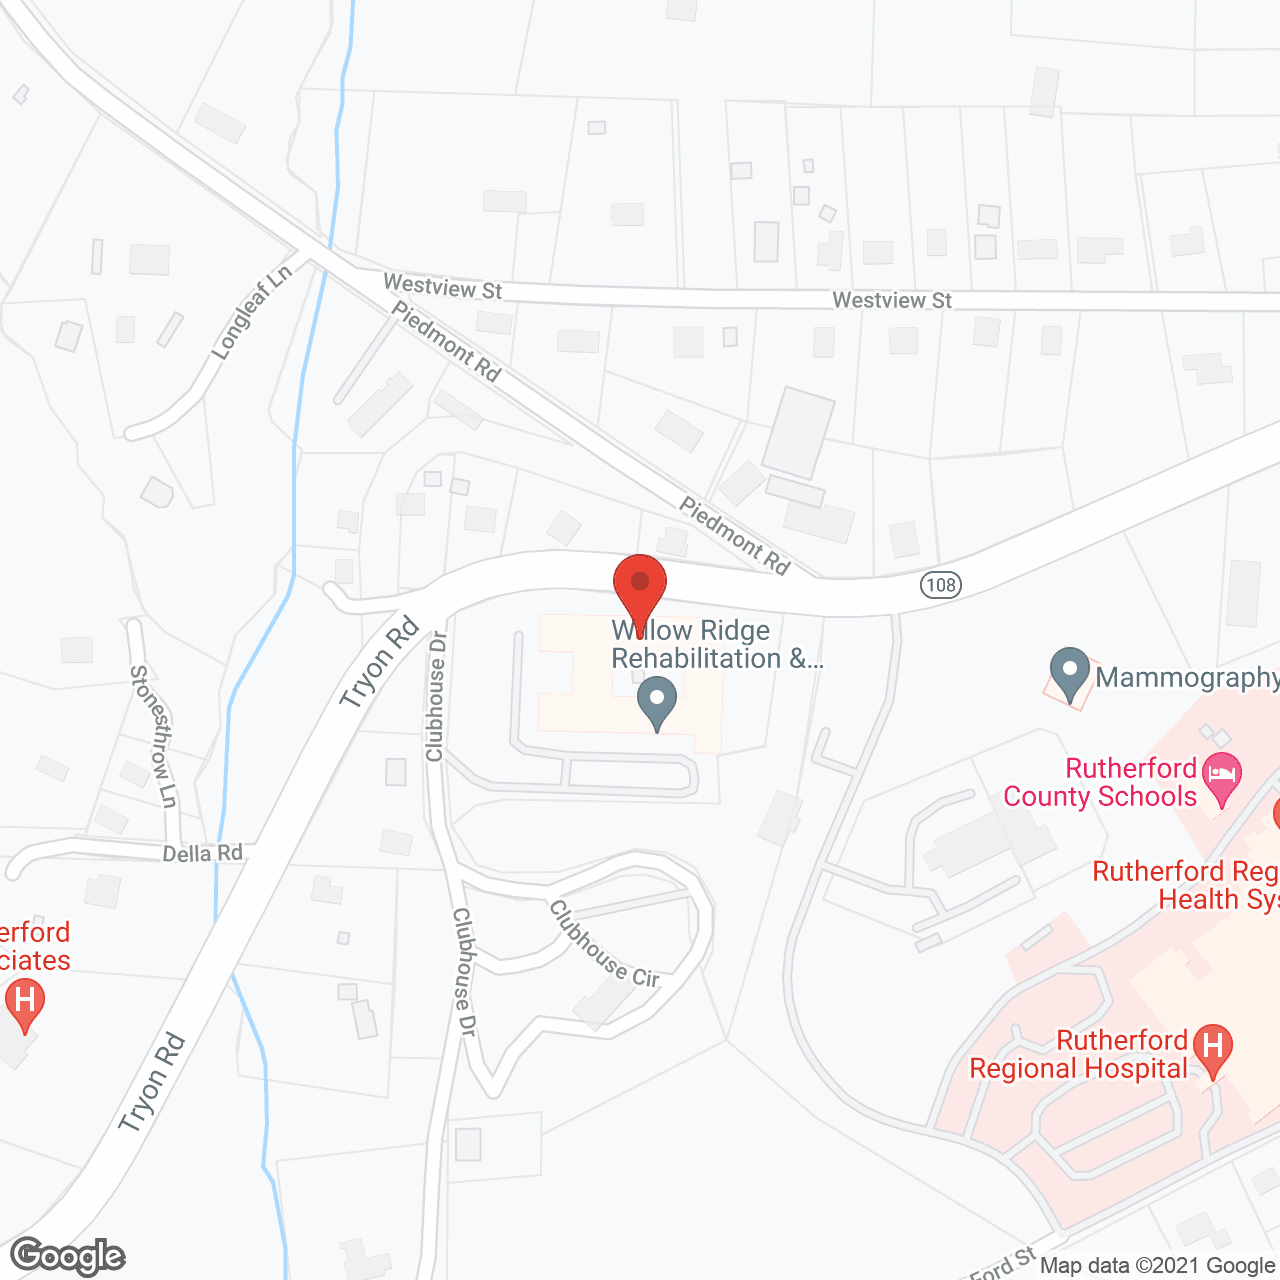 Willow Ridge in google map